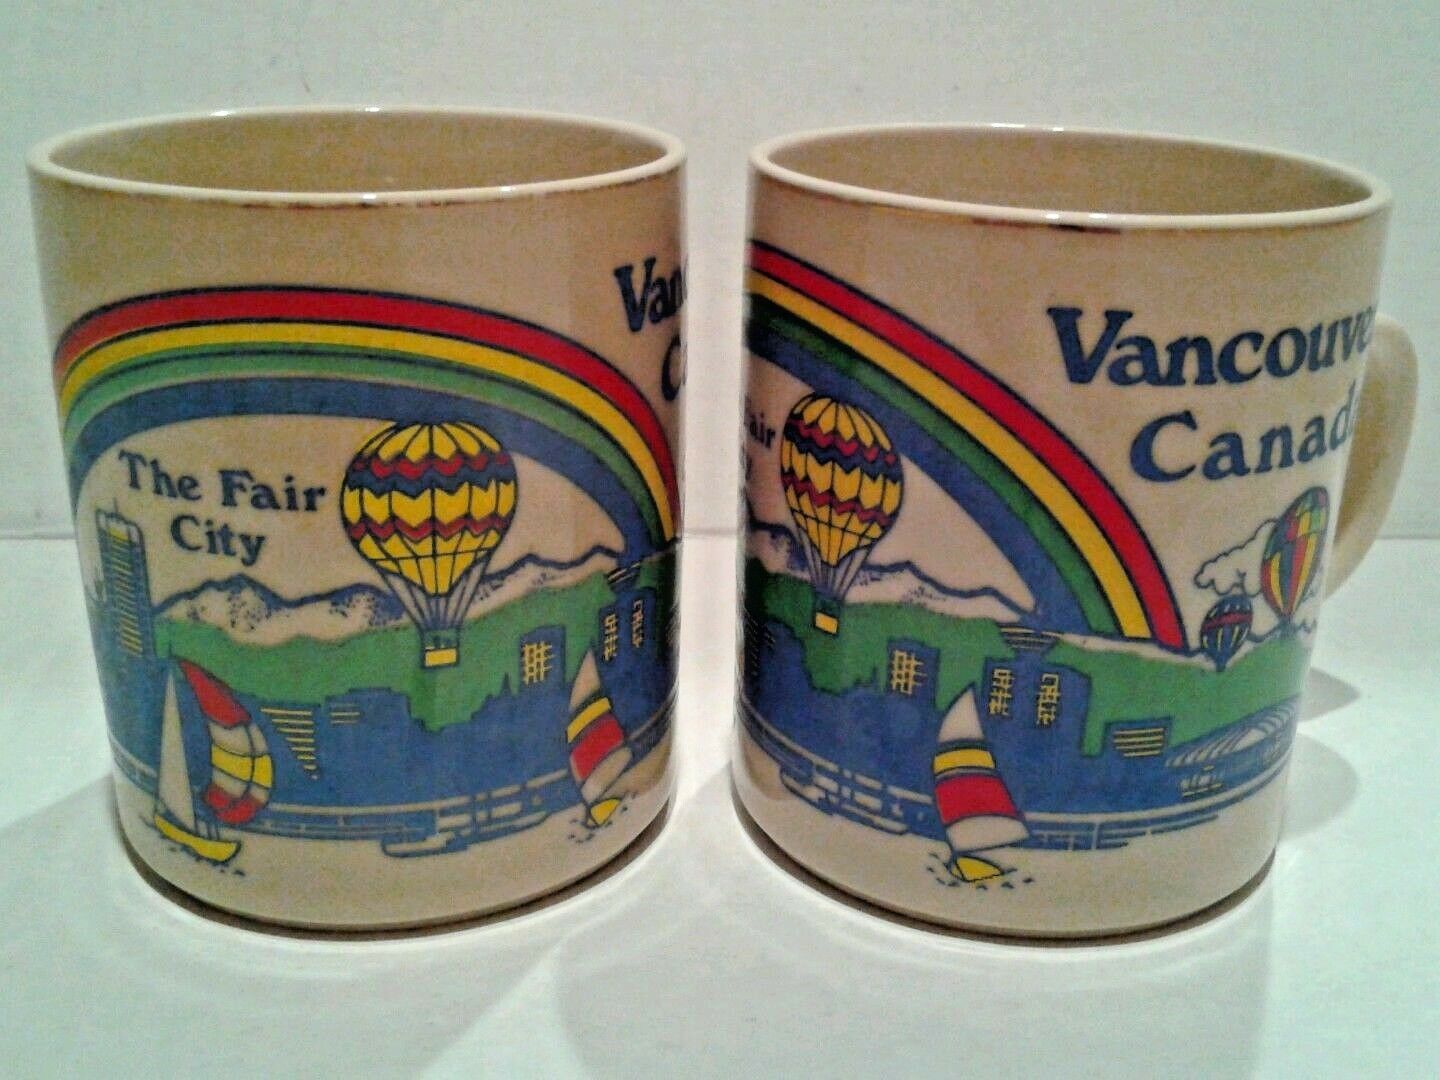 World Fair Vancouver Canada Mug Mugs Rainbow Fair City British Columbia '86 Expo